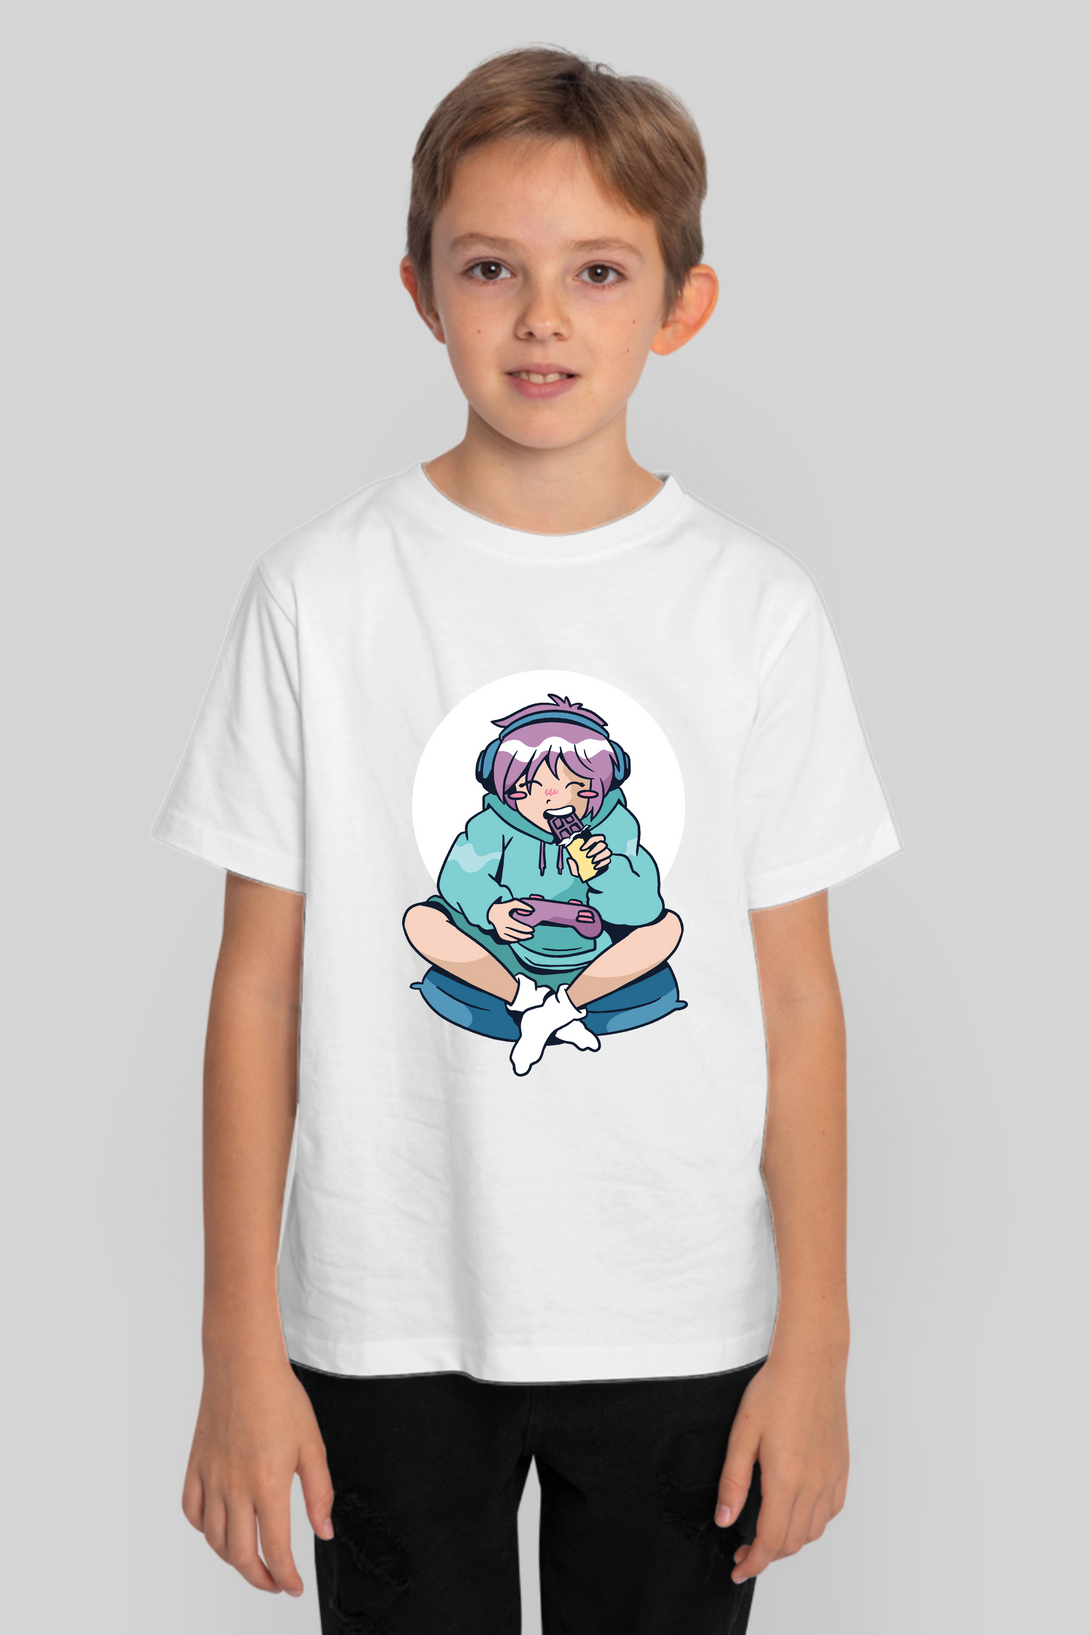 Gamer Anime Printed T-Shirt For Boy - WowWaves - 7